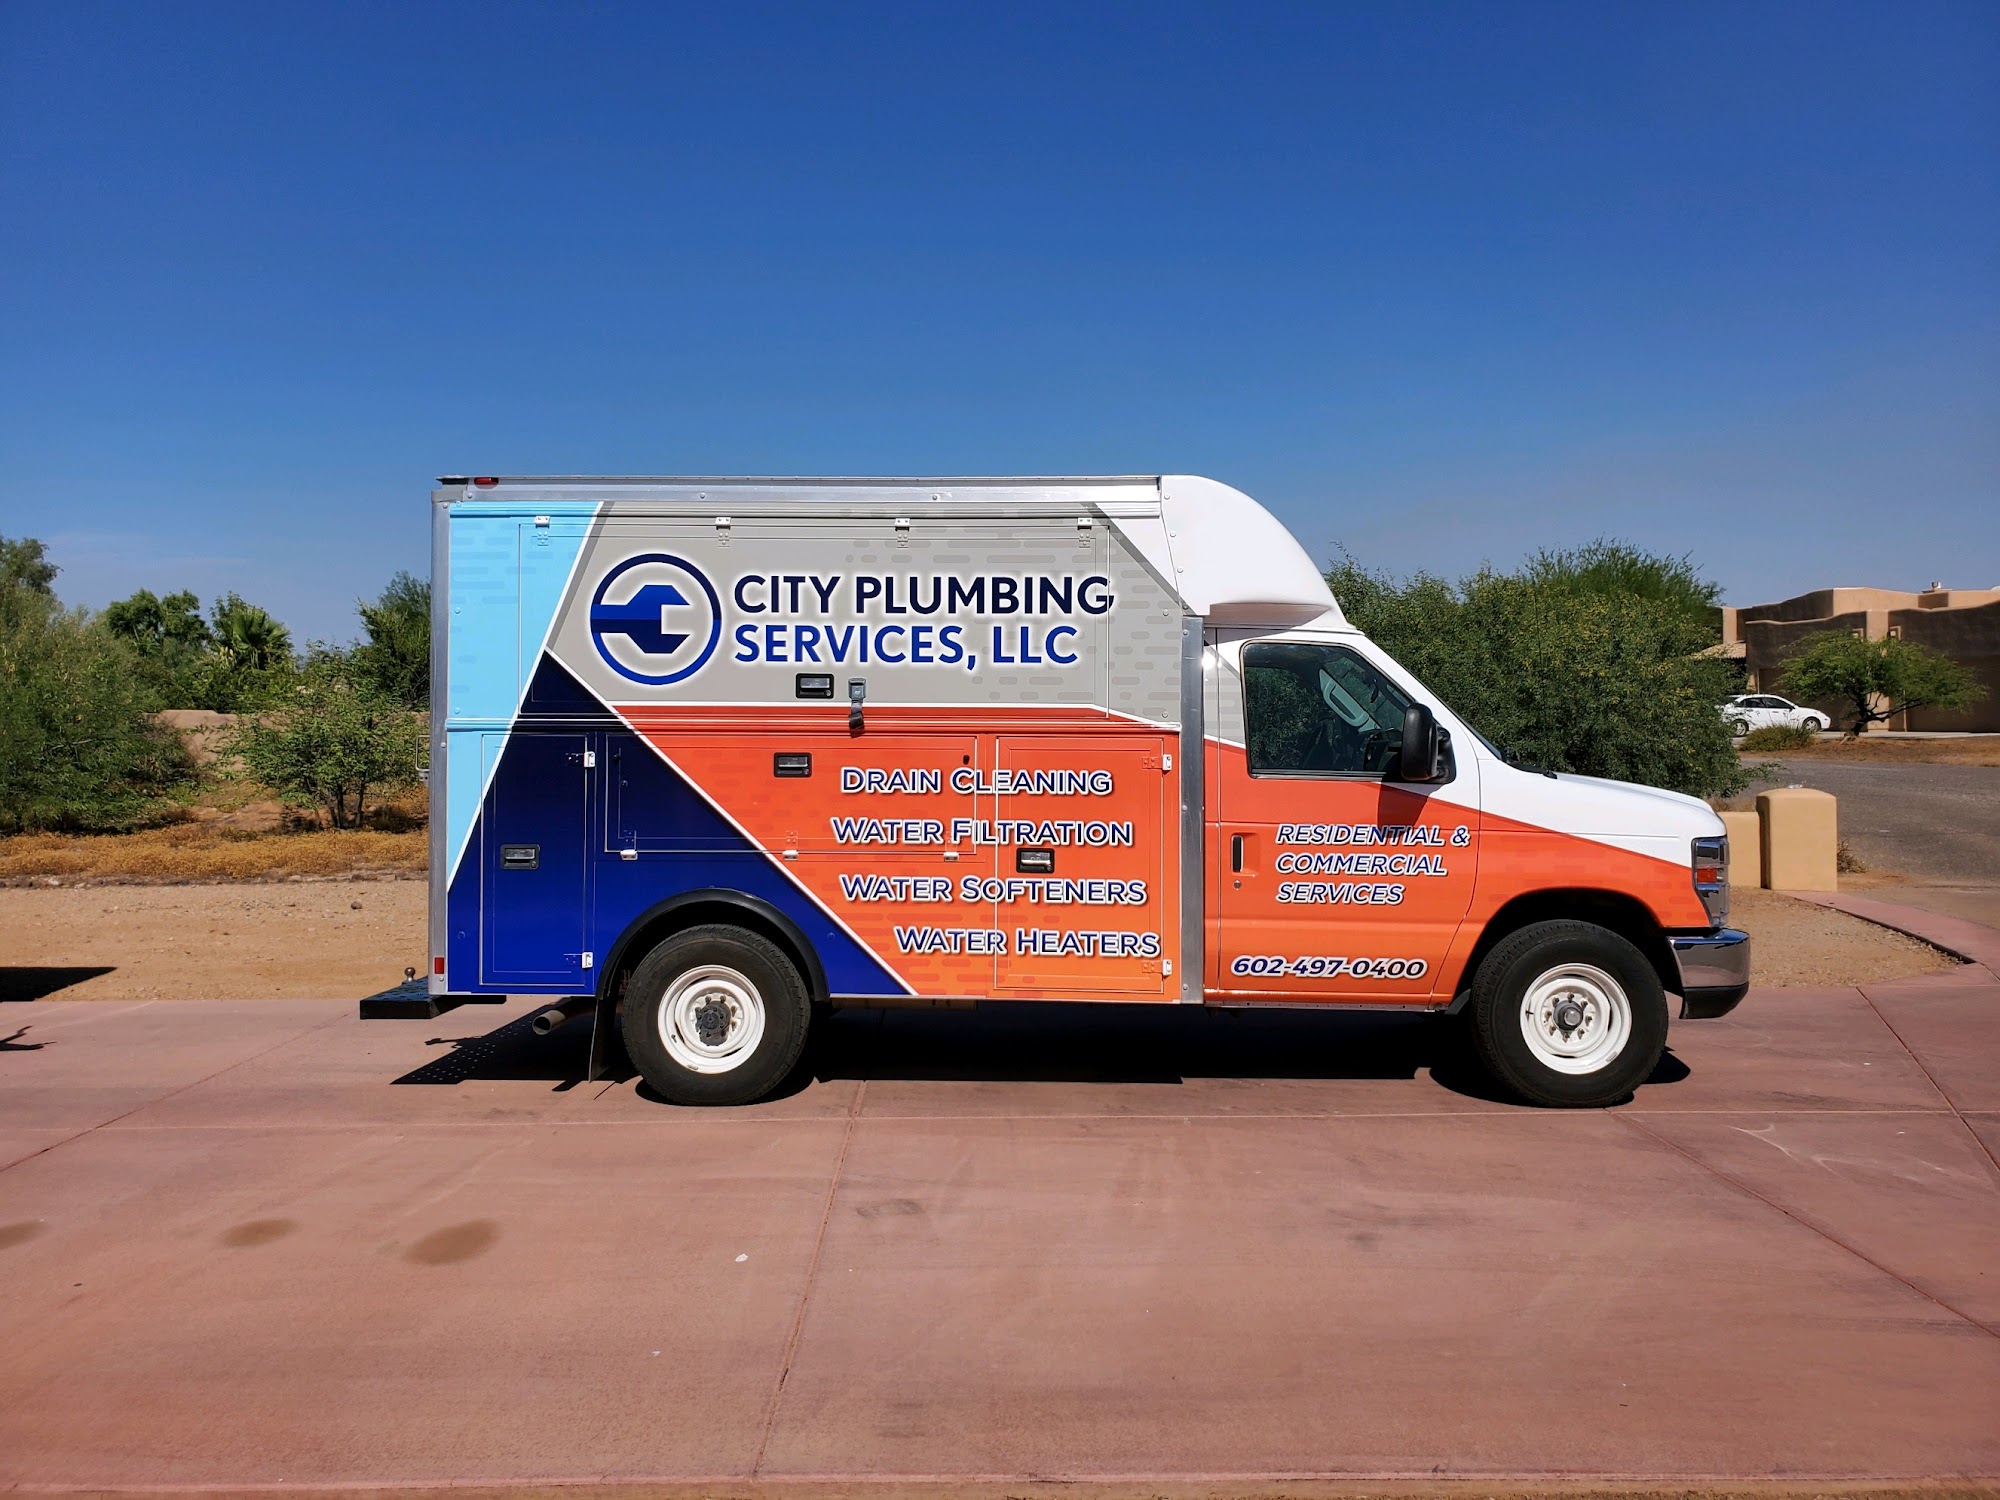 City Plumbing Services